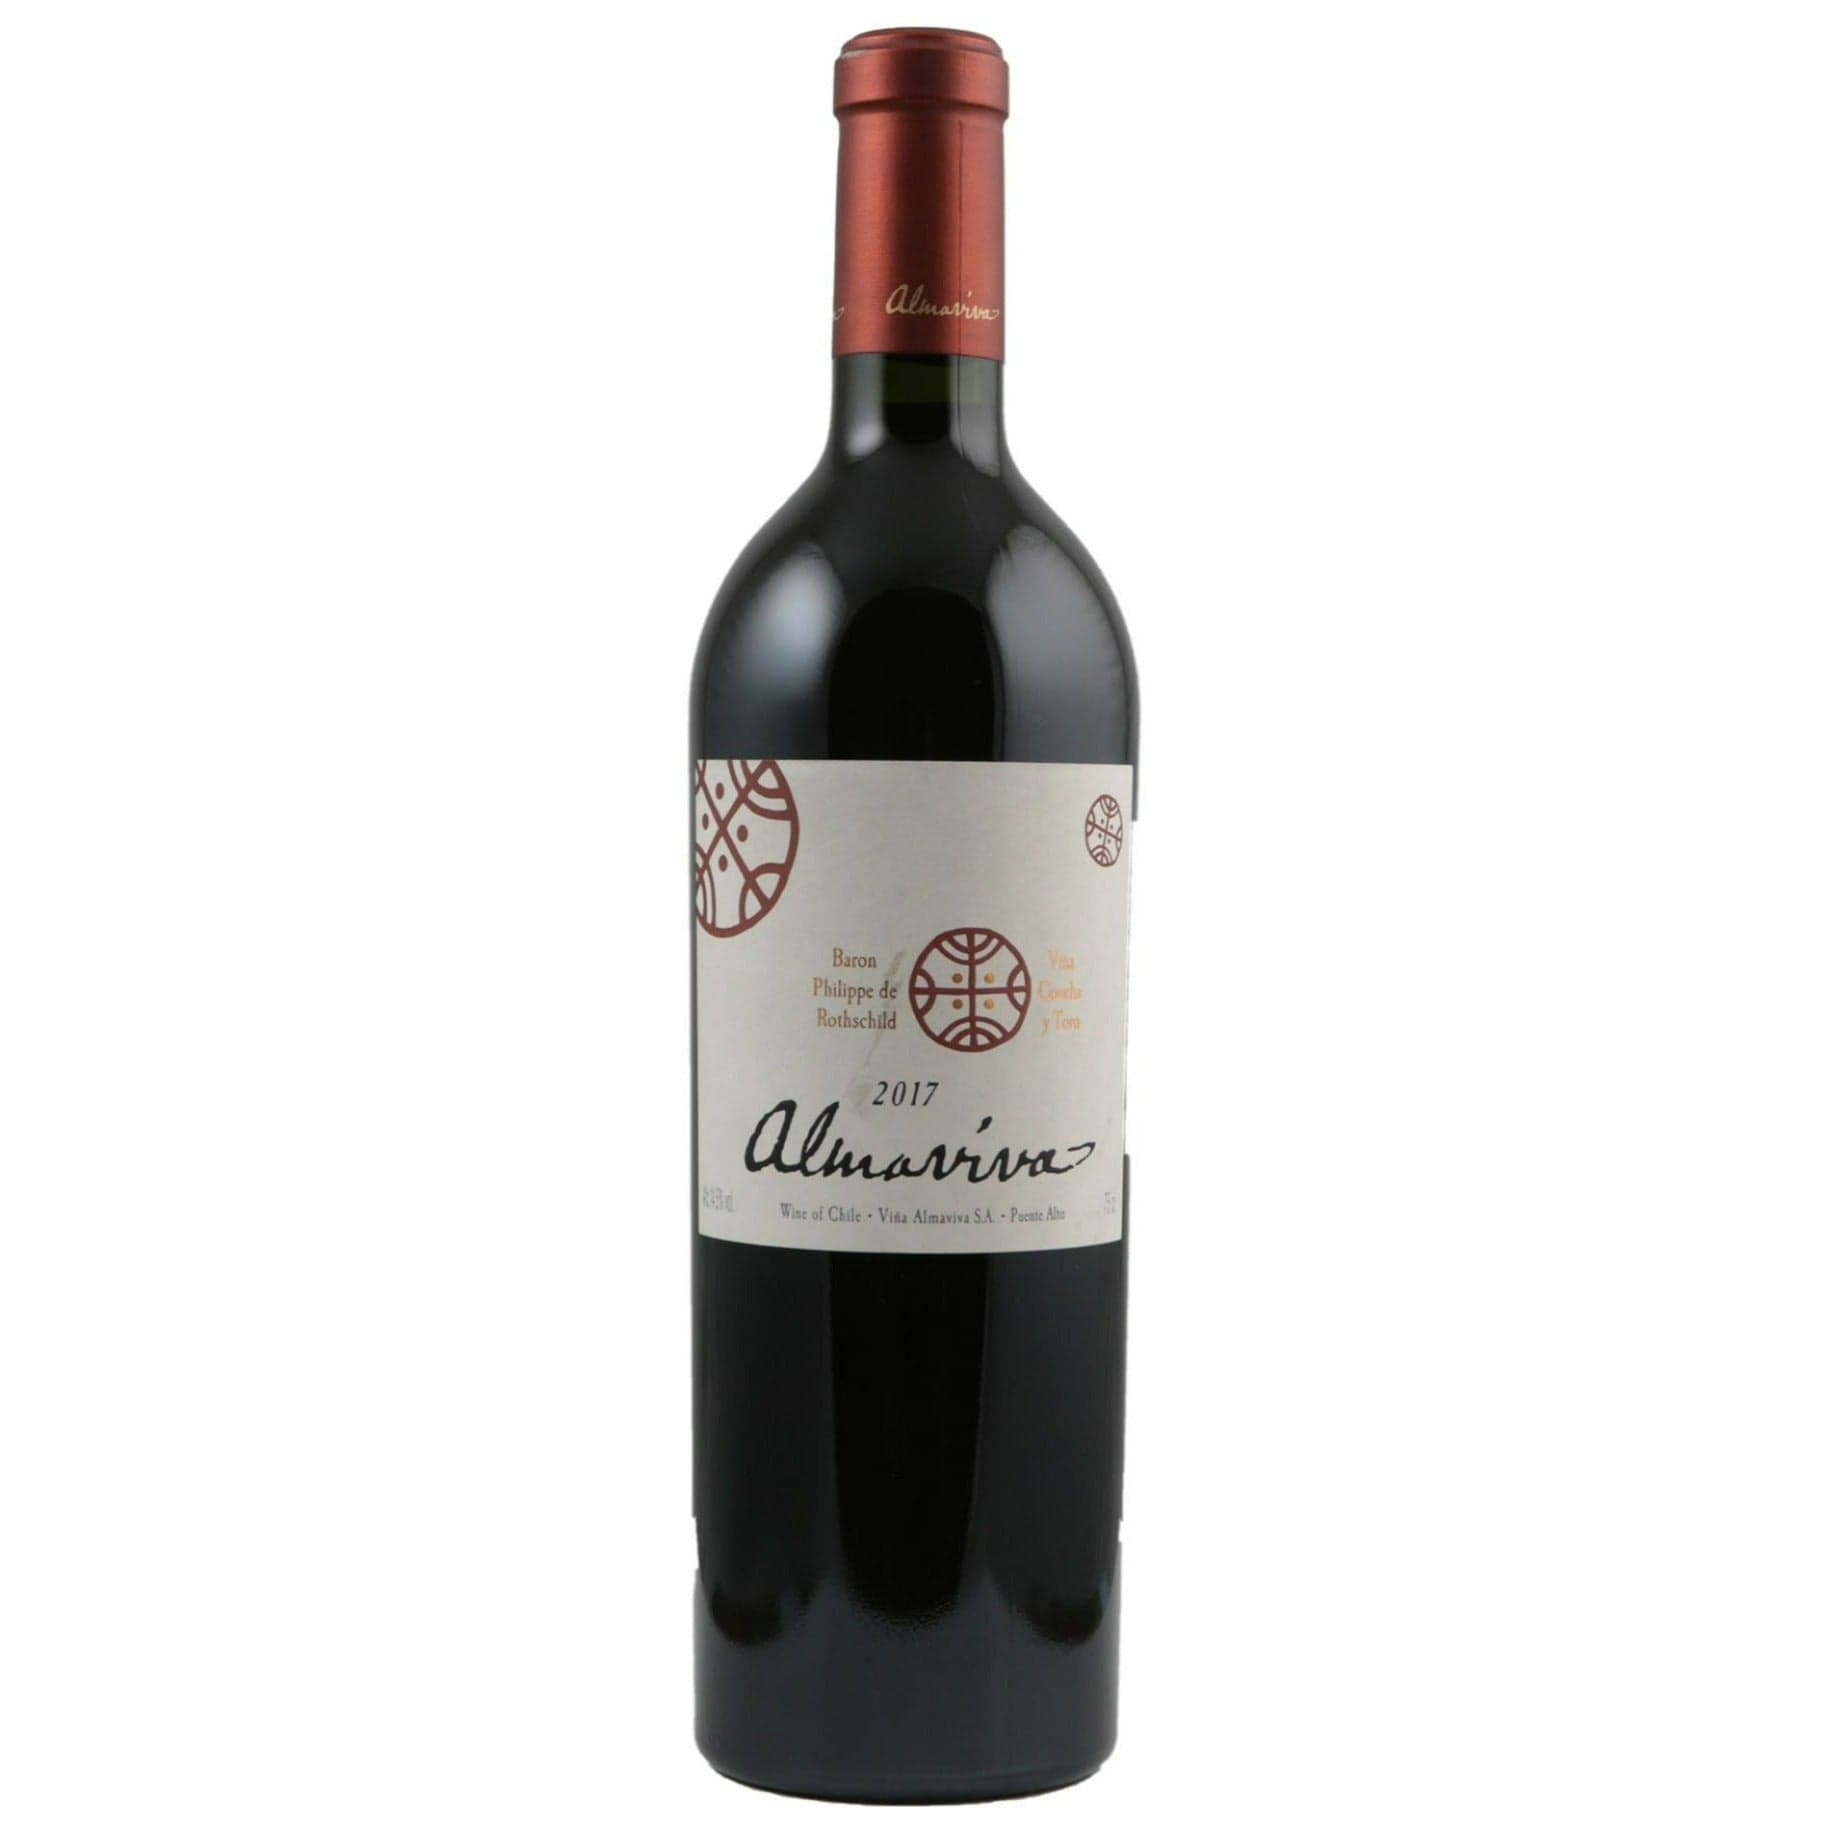 Single bottle of Red wine Almaviva Winery, Vina Almaviva, Maipo Valley, 2017 65% Cabernet Sauvignon, 23% Carmenere, 5% Cabernet Franc, 5% Petit Verdot & 2% Merlot